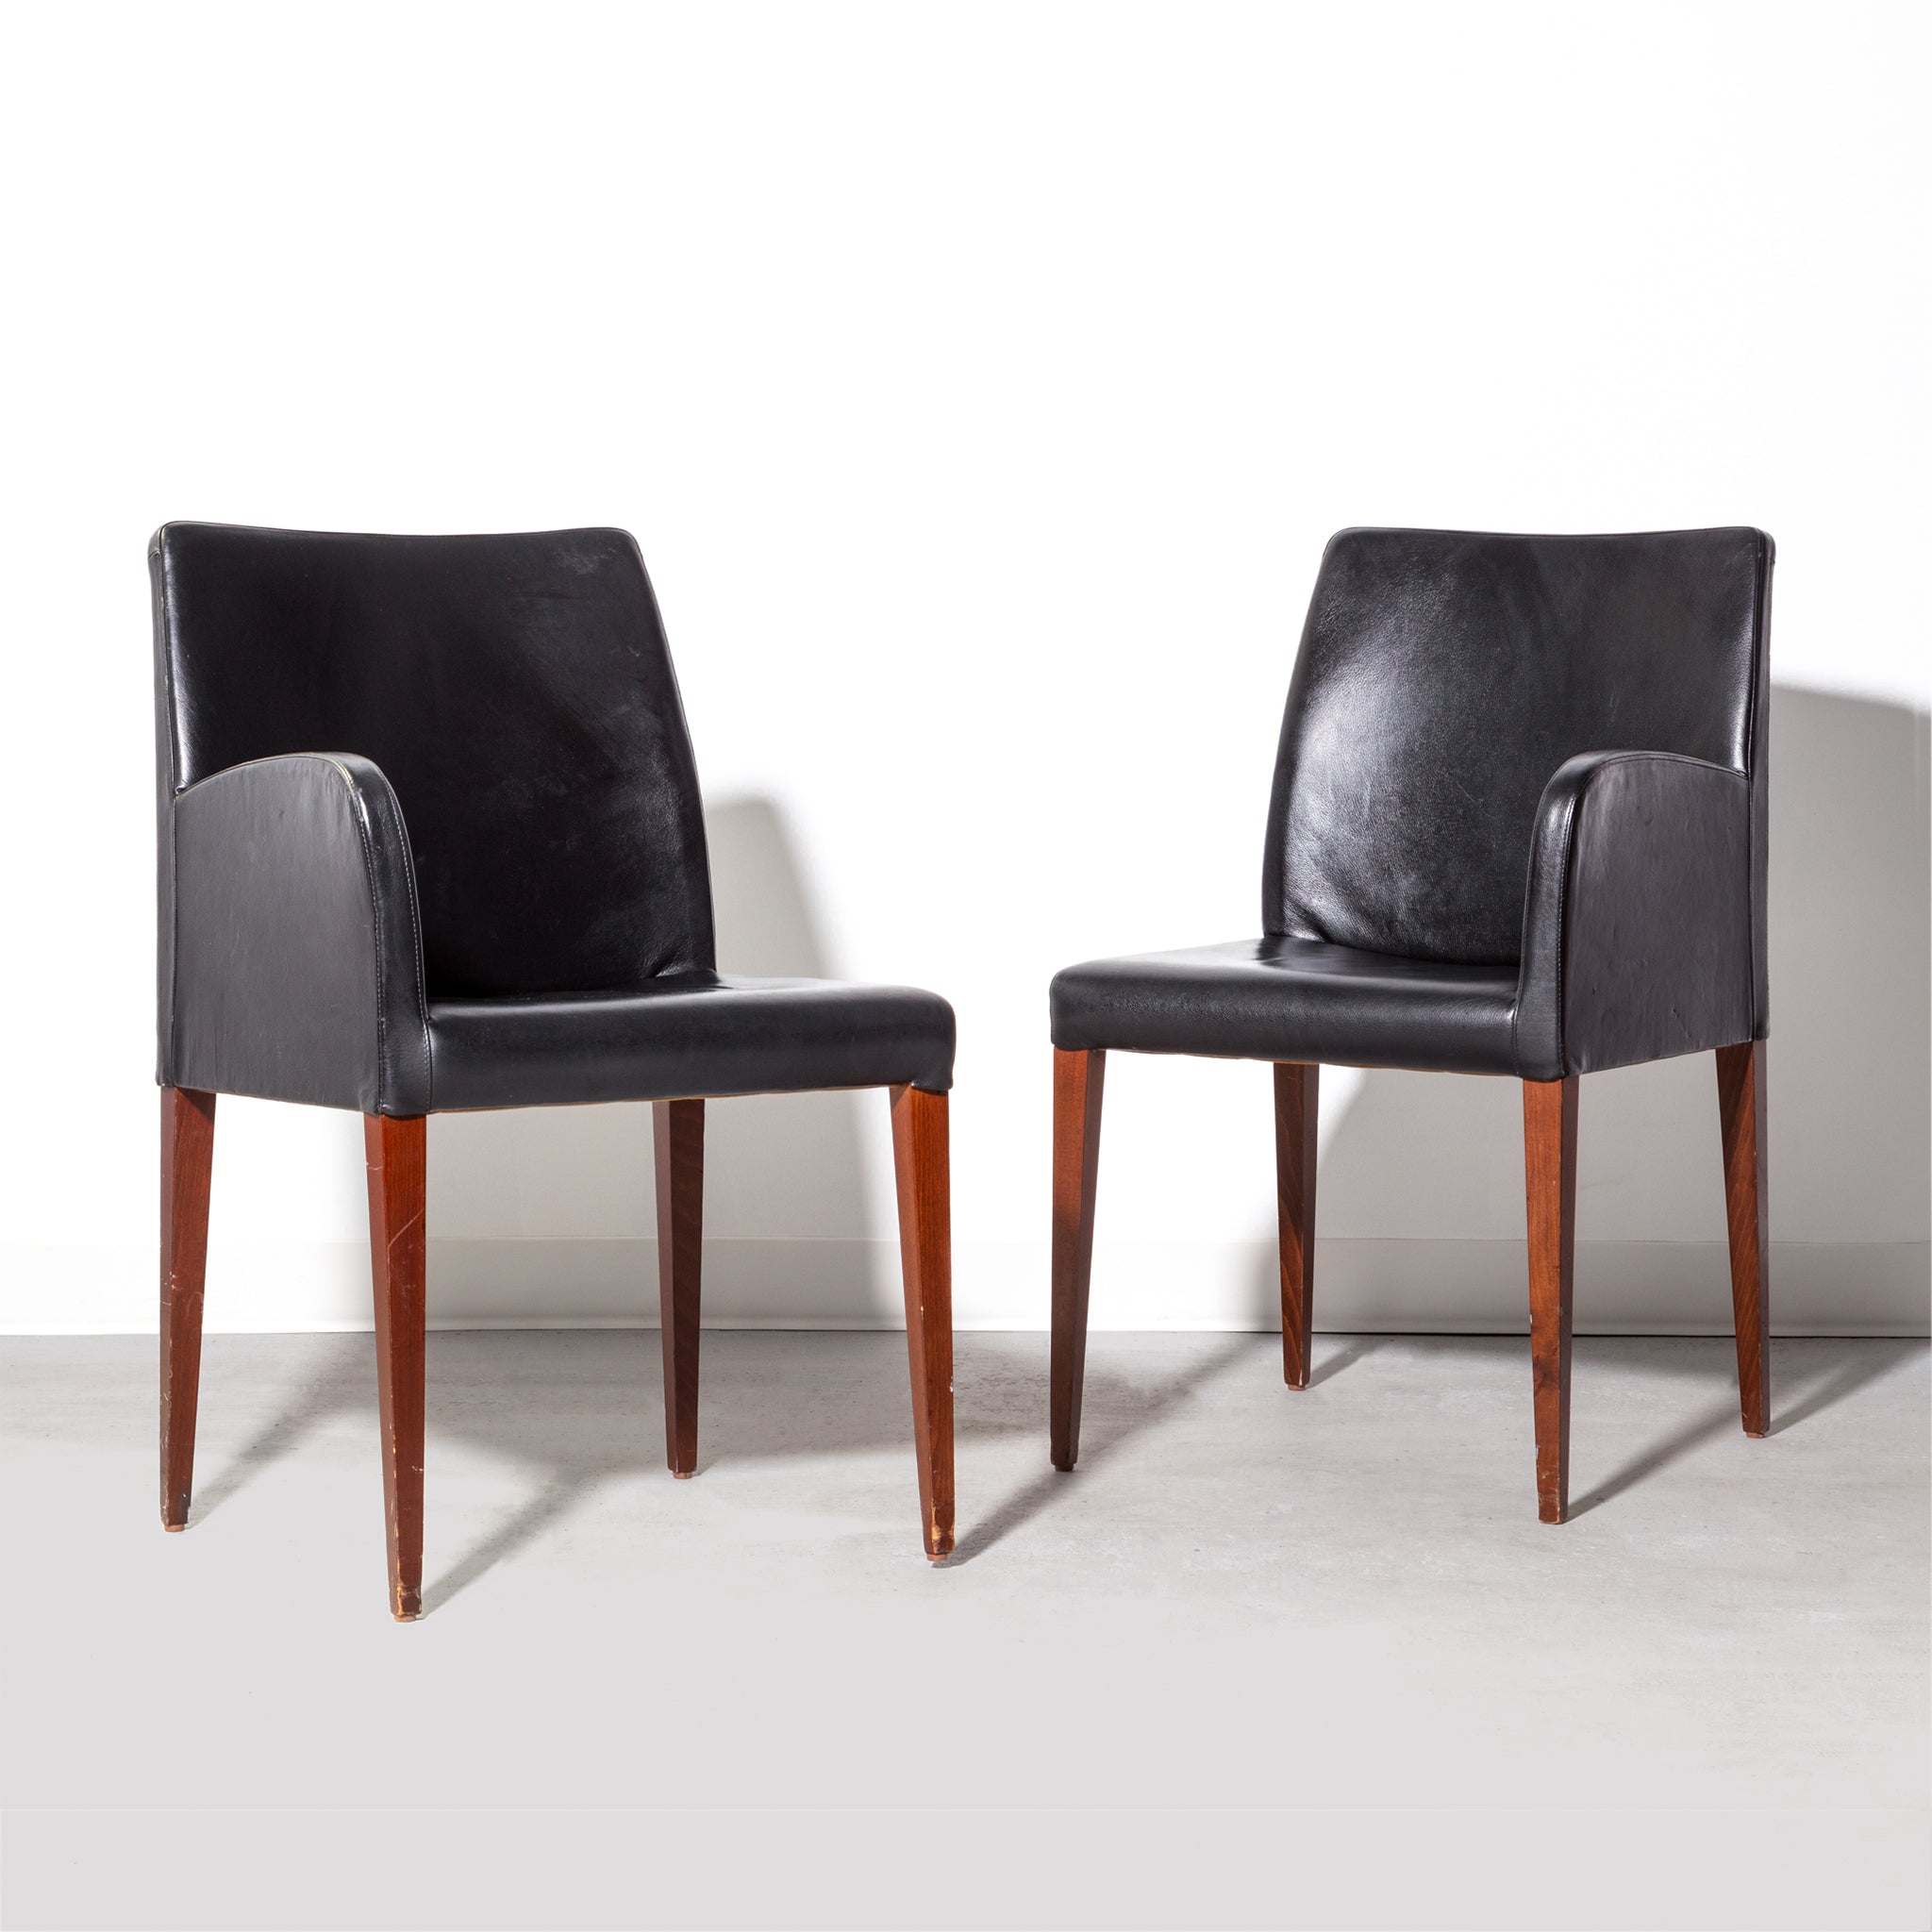 Poltrona Frau Italian Leather Convertible Chairs